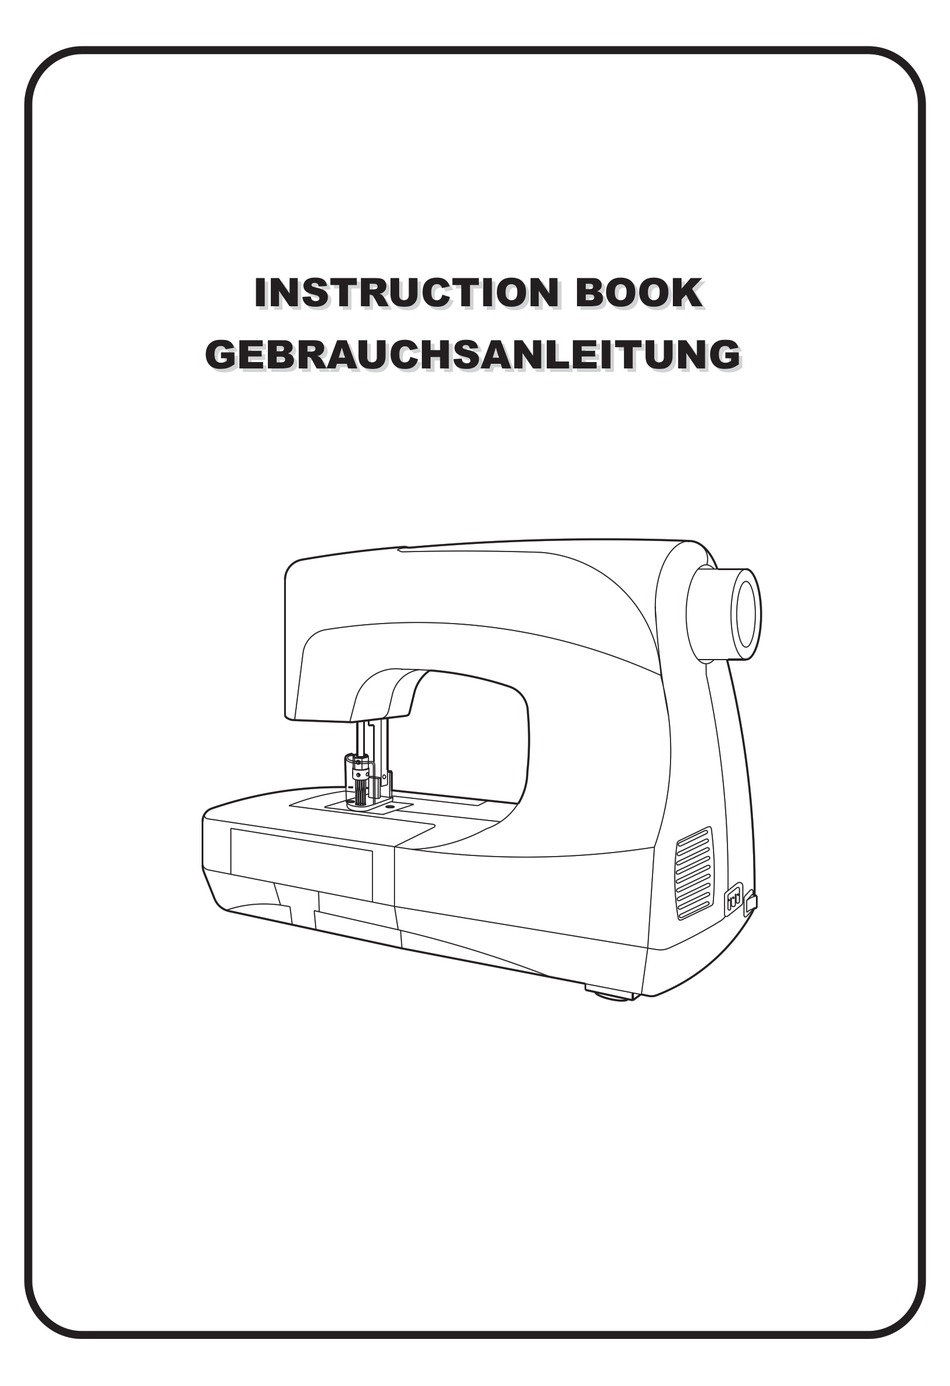 CARINA SEWING MACHINE INSTRUCTION BOOK Pdf Download | ManualsLib